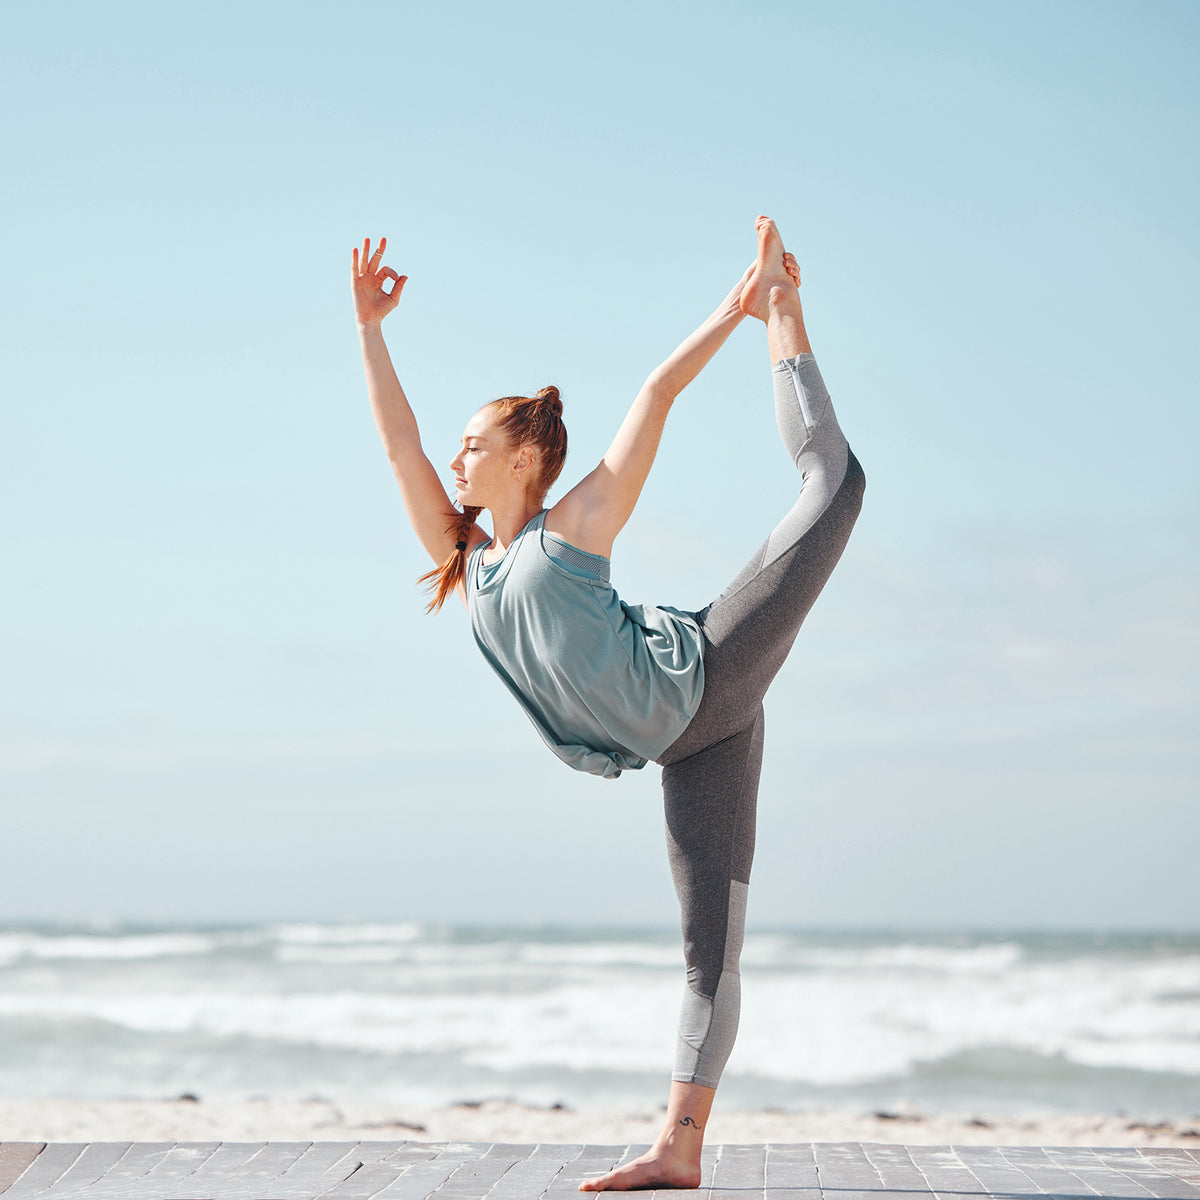 Cathalem Yoga Pants for Women Petite Length Exercise Yoga Waist